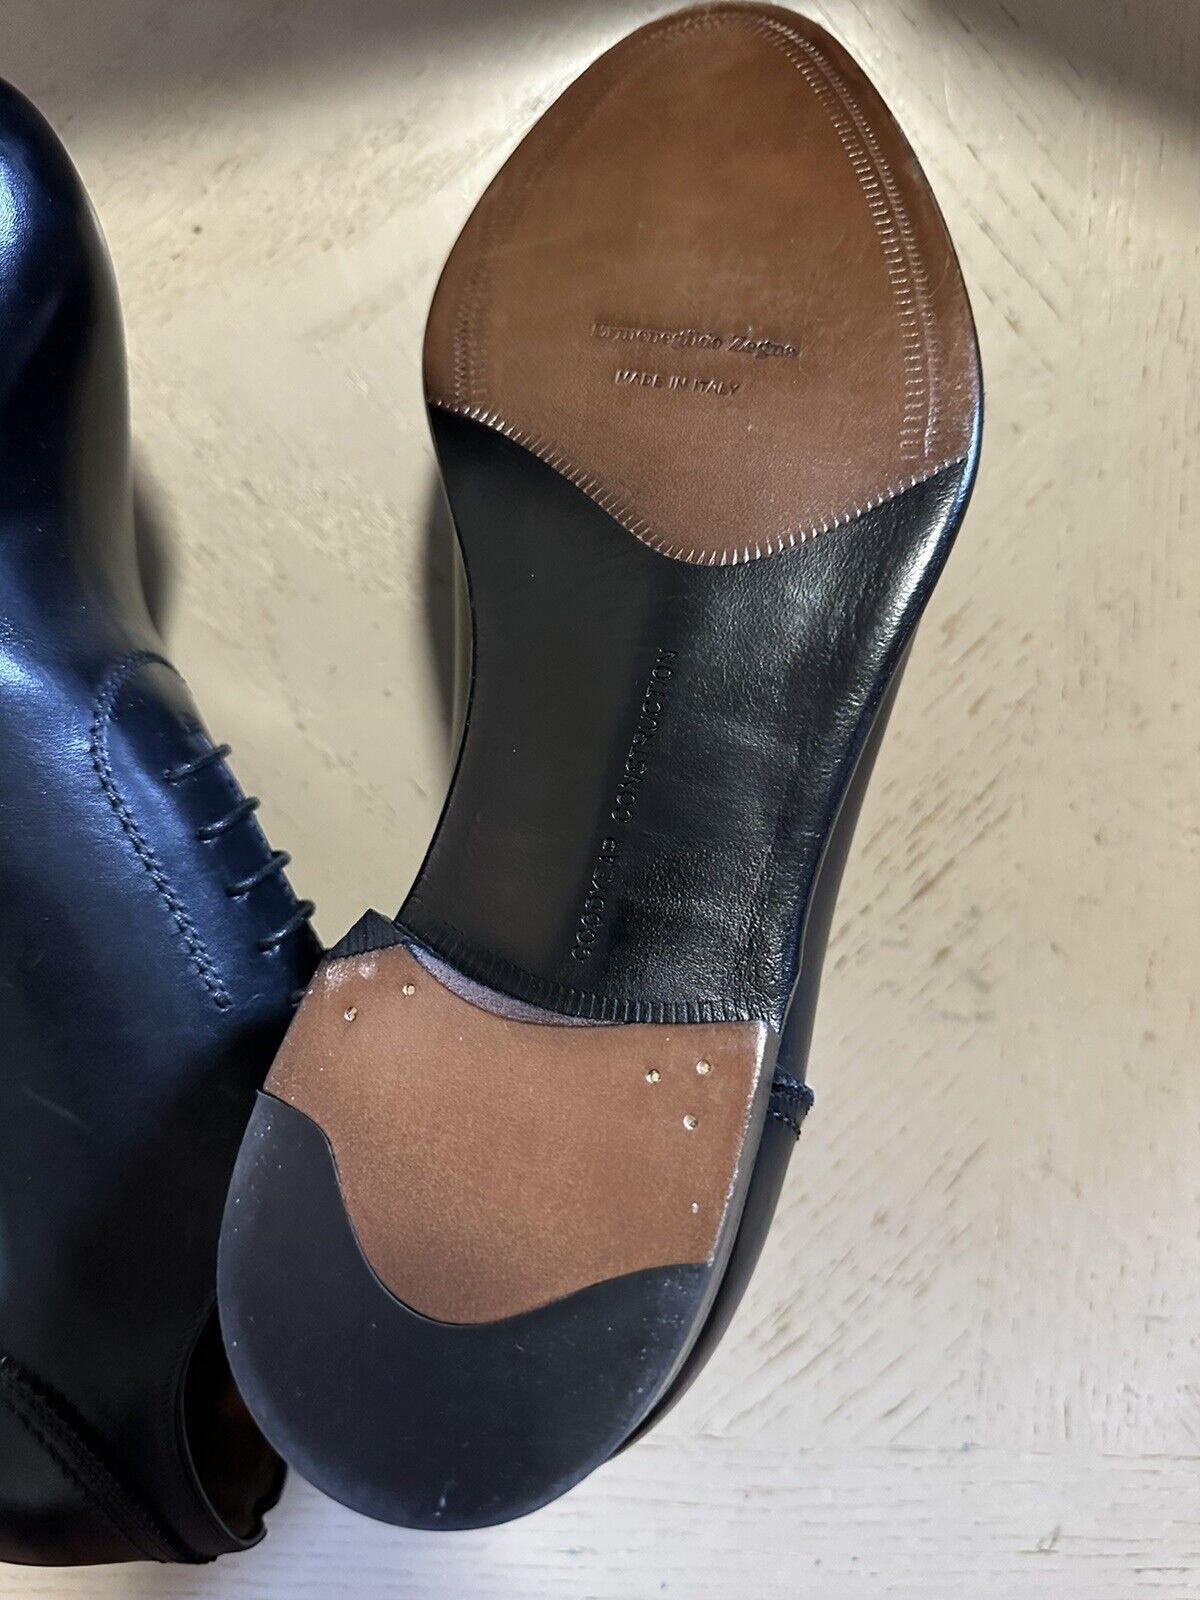 New $1250 Ermenegildo Zegna Couture Oxford Leather Shoes Black 10 US Italy